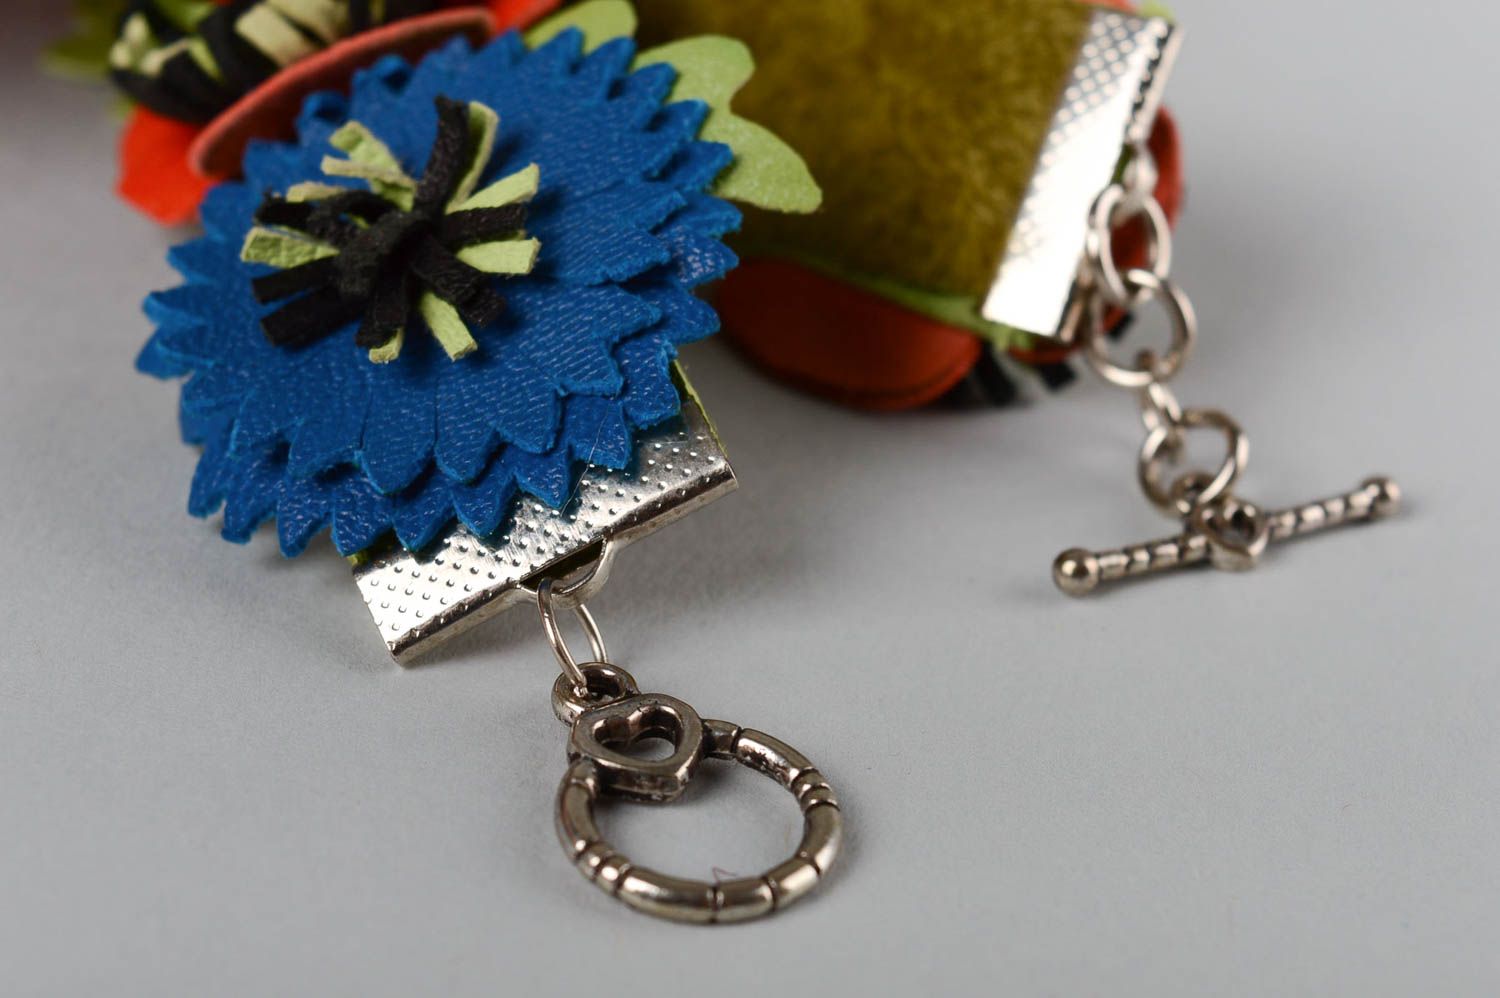 Handmade leather bracelet summer wrist bracelet jewelry designs gifts for her photo 3